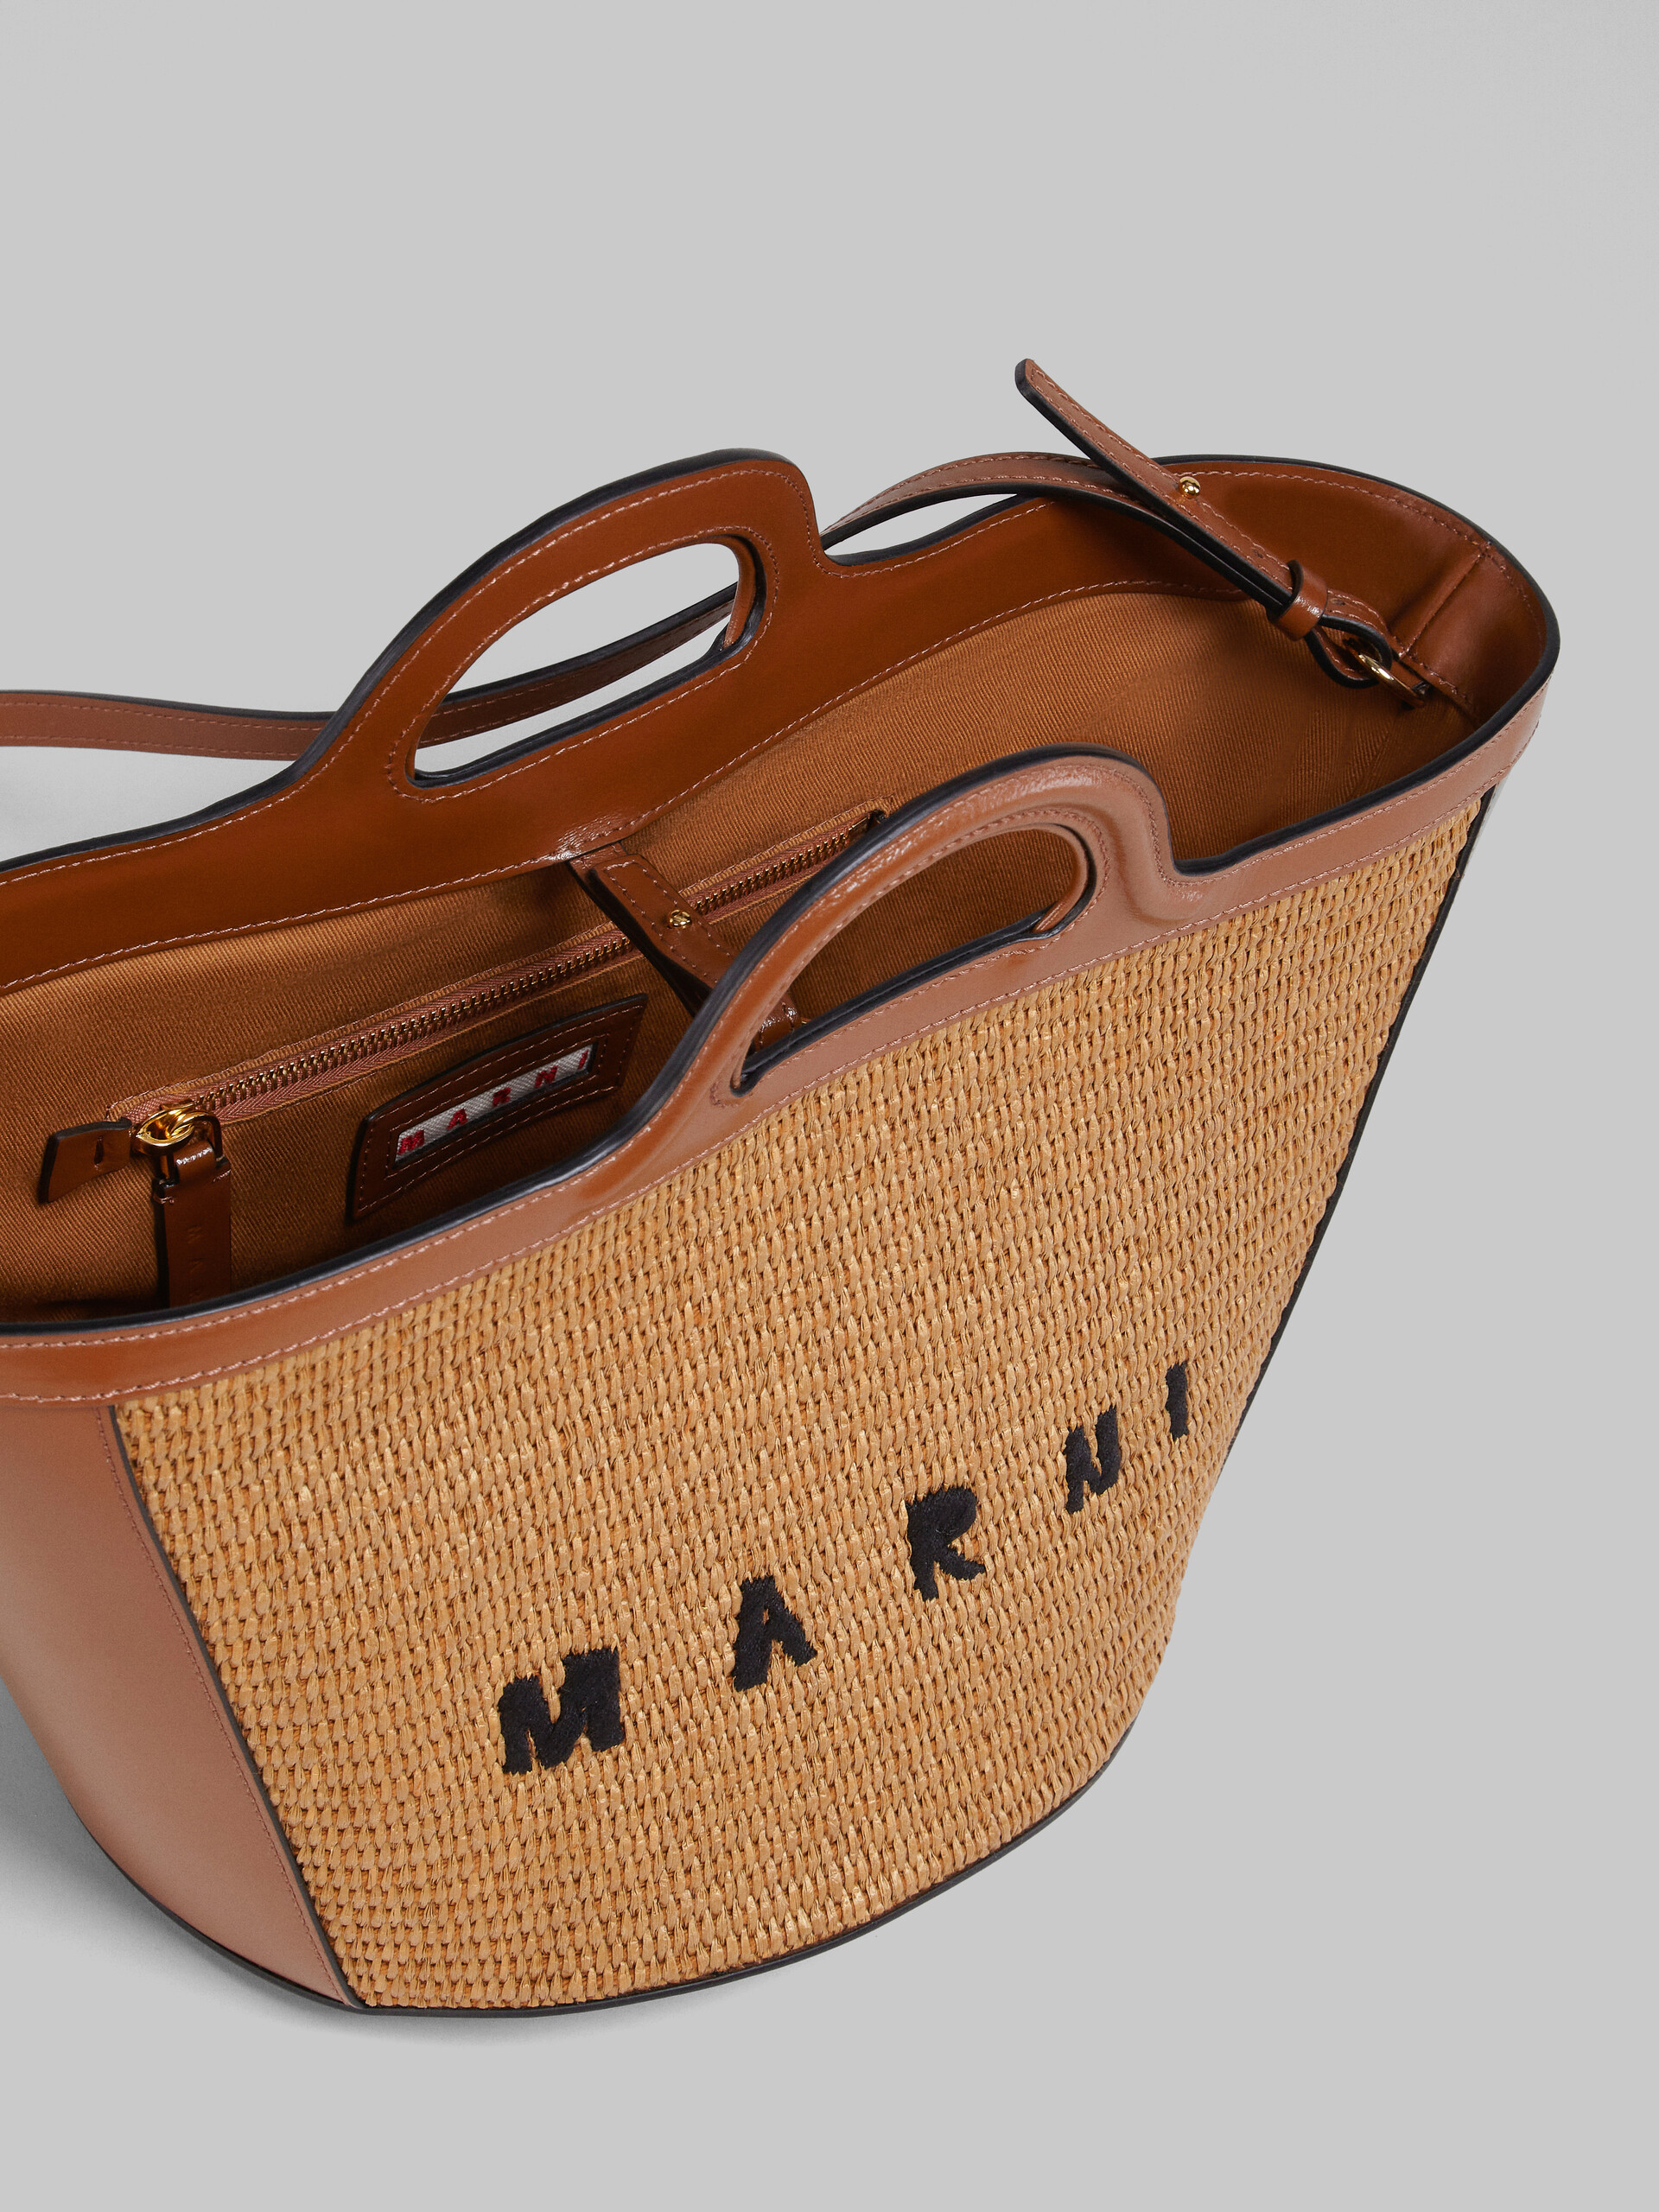 TROPICALIA small bag in brown leather and raffia - Handbags - Image 5